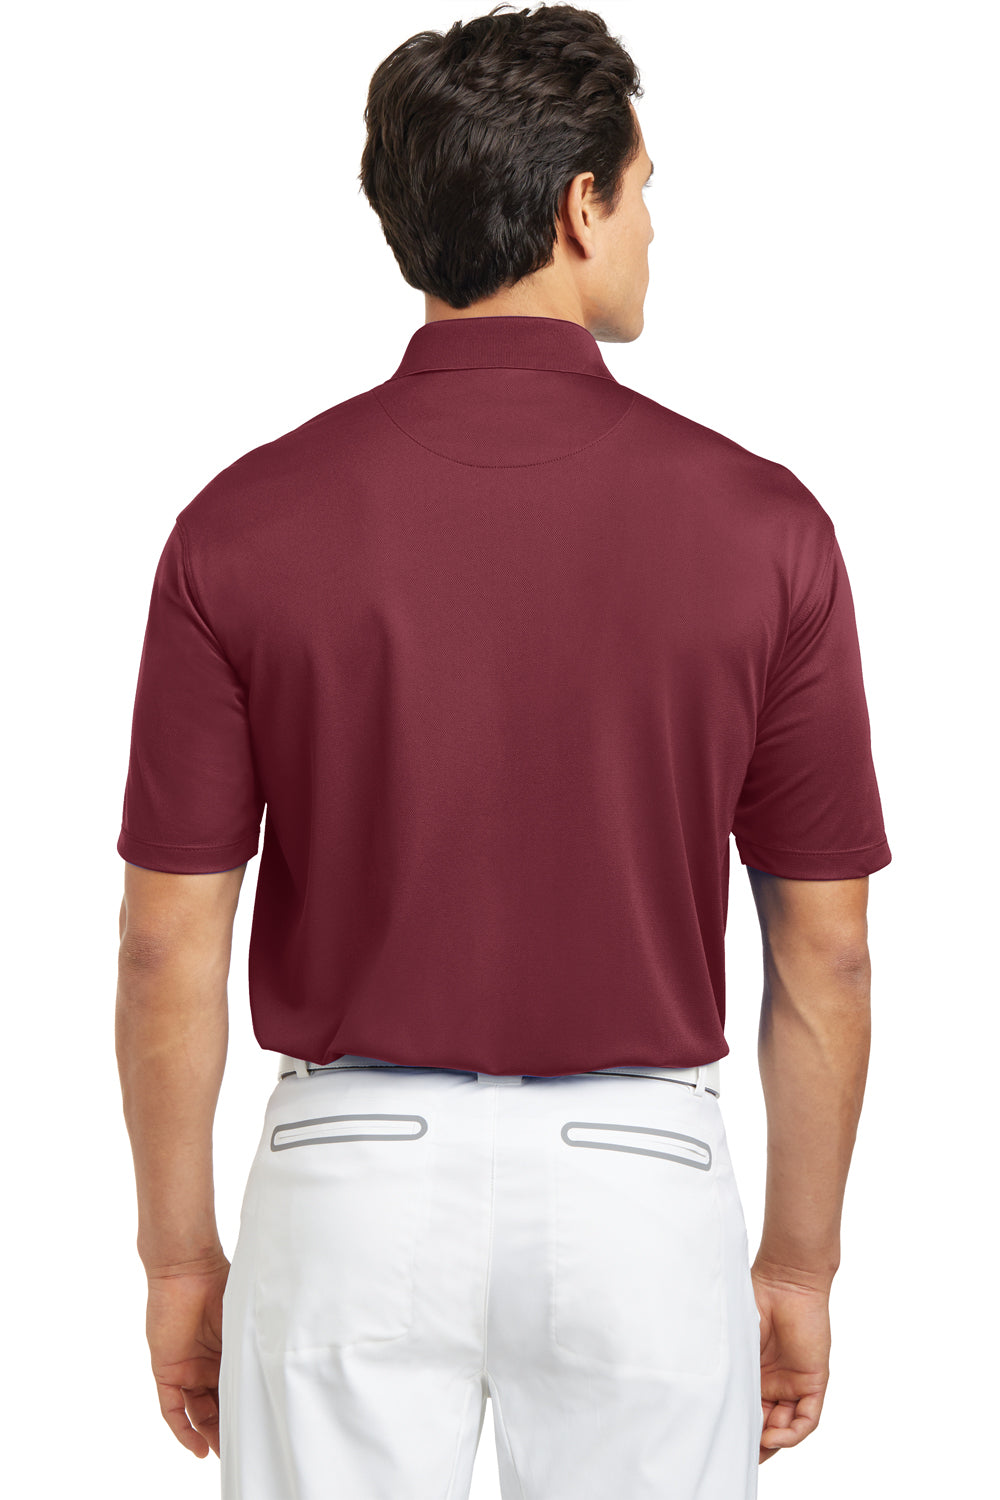 Nike 203690 Mens Tech Basic Dri-Fit Moisture Wicking Short Sleeve Polo Shirt Team Red Model Back